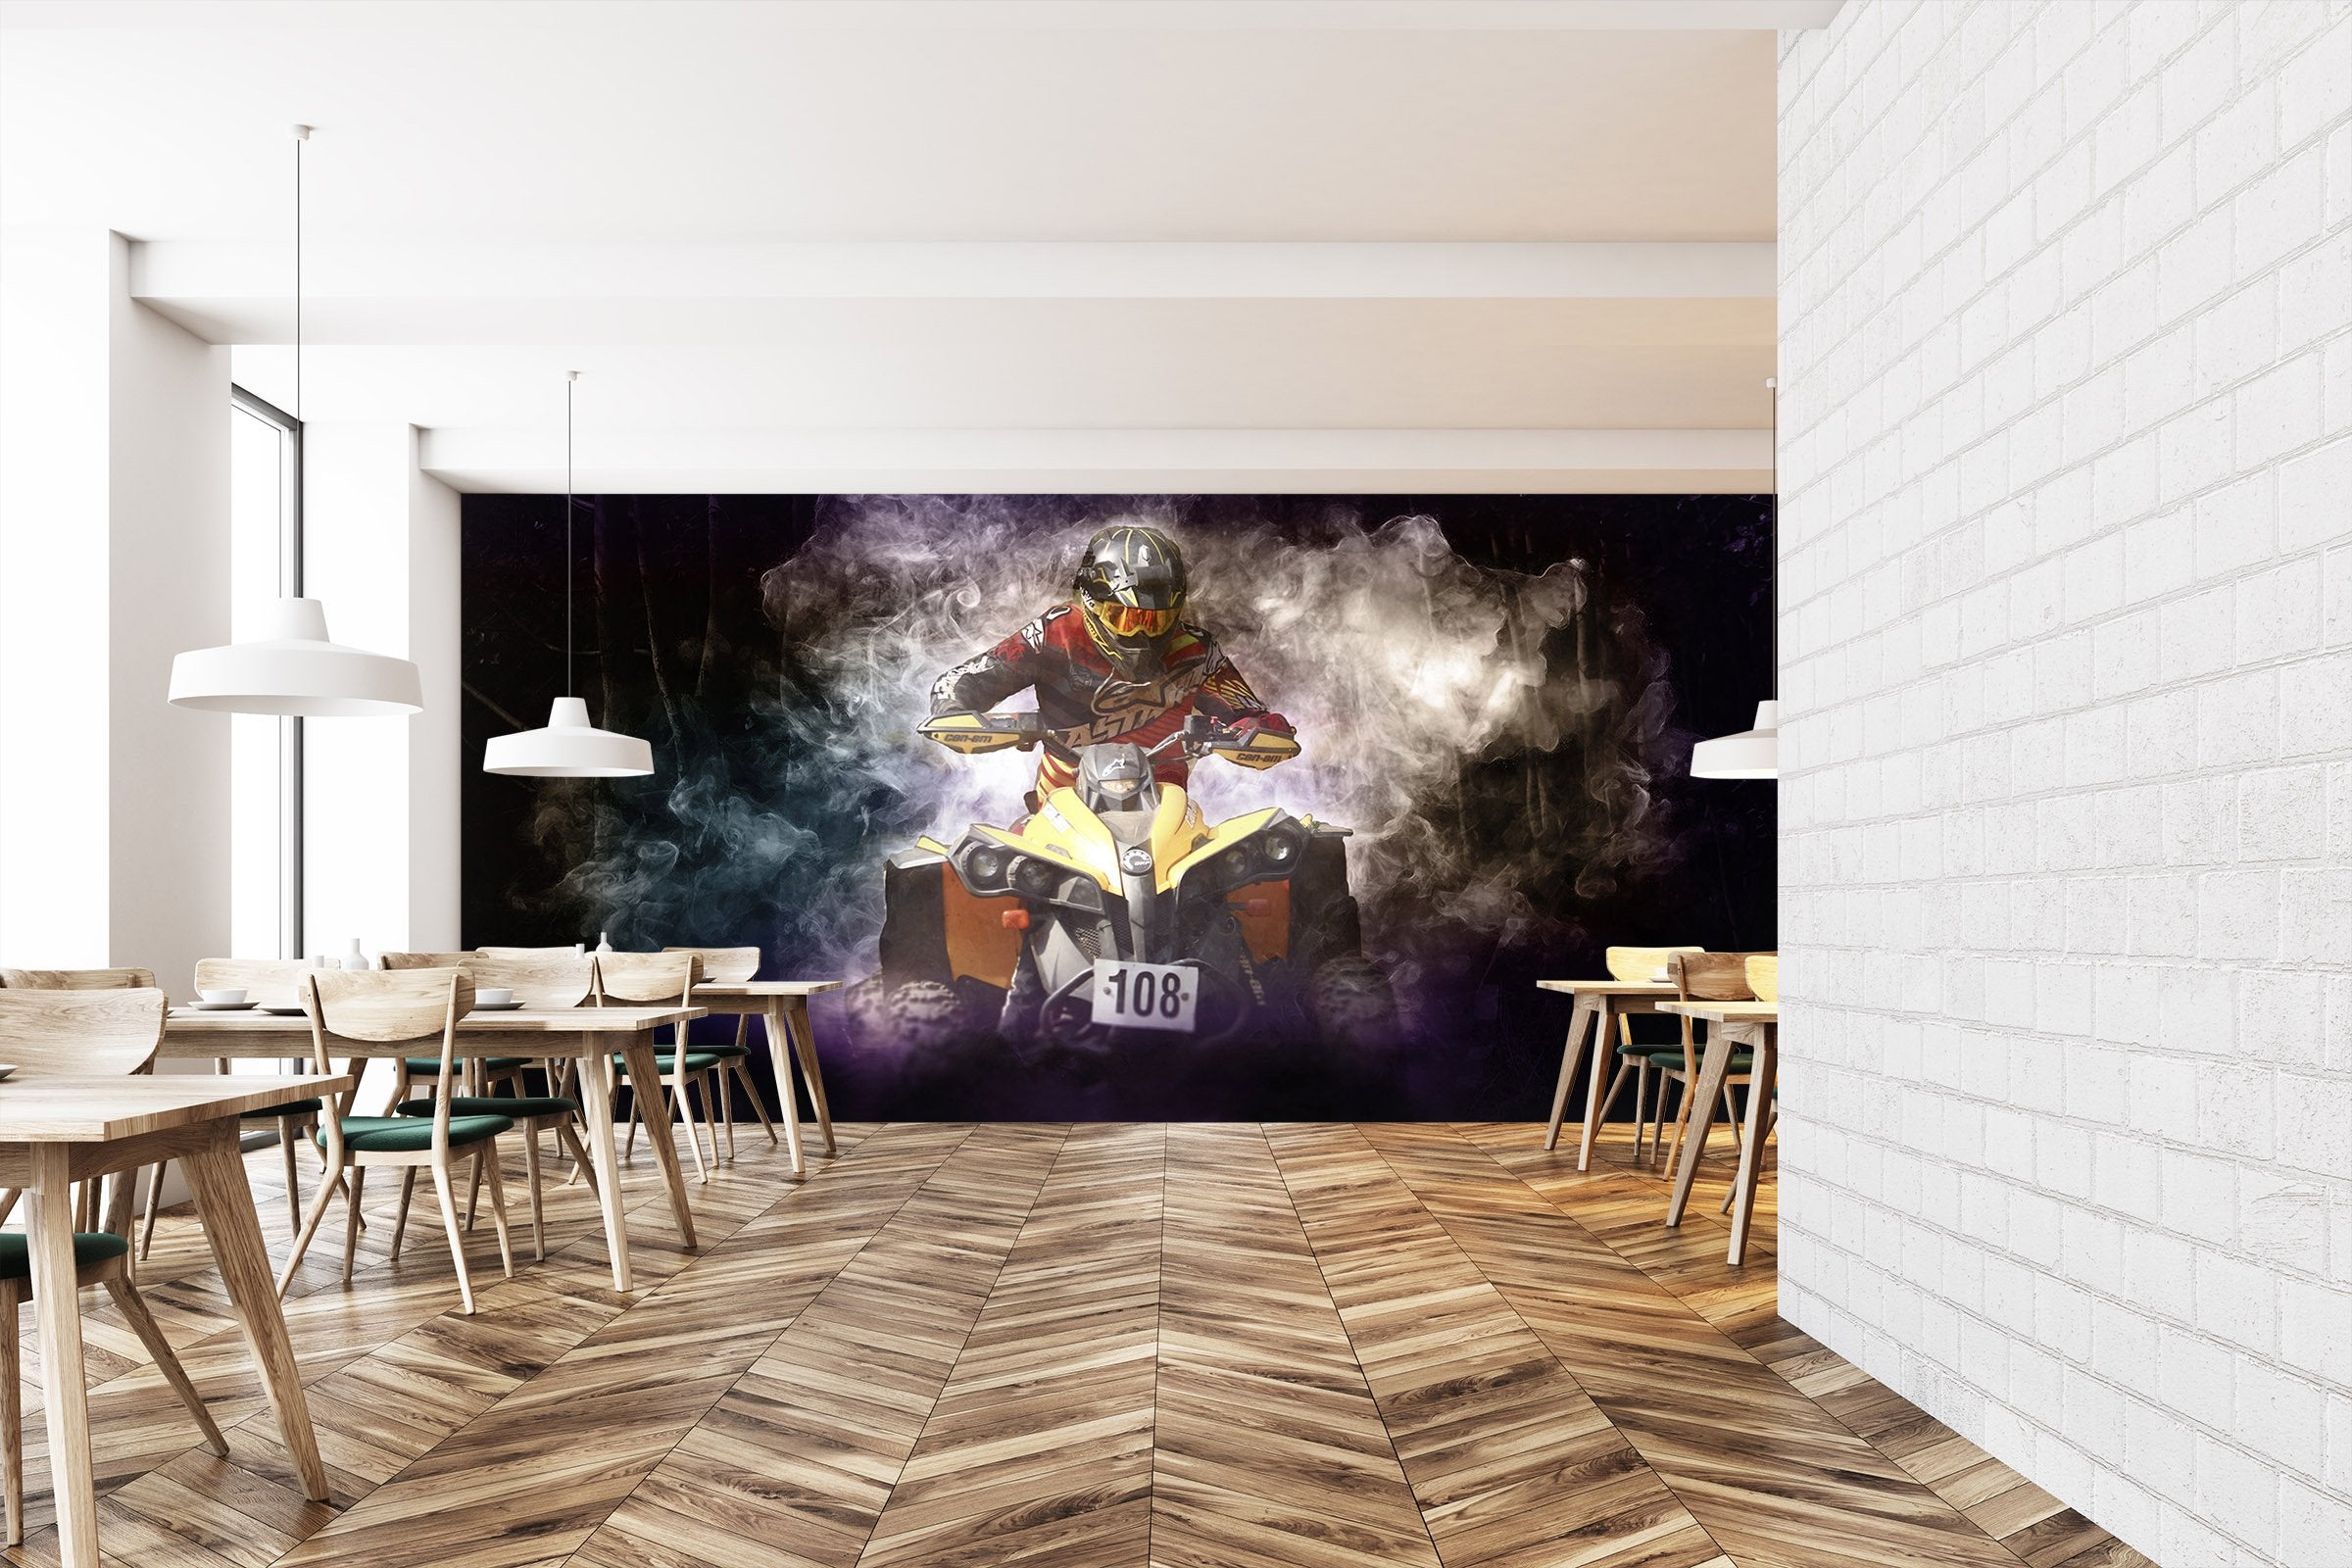 3D Motocross 1000 Vehicle Wall Murals Wallpaper AJ Wallpaper 2 